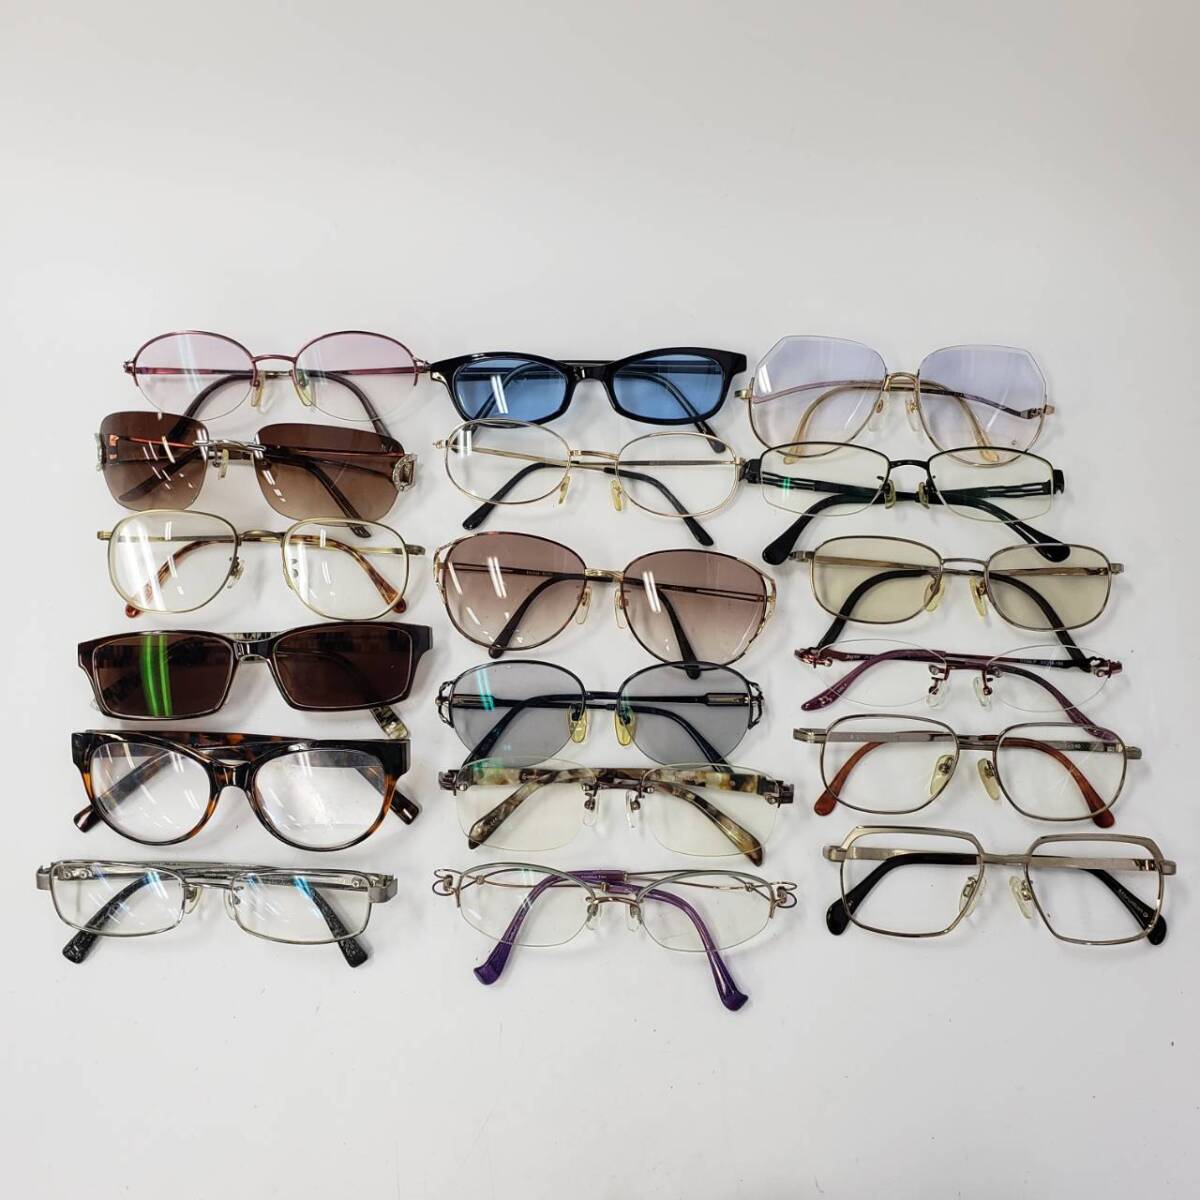 M061(3300)-584 sunglasses glasses large amount summarize gross weight : approximately 3.3. condition sama .